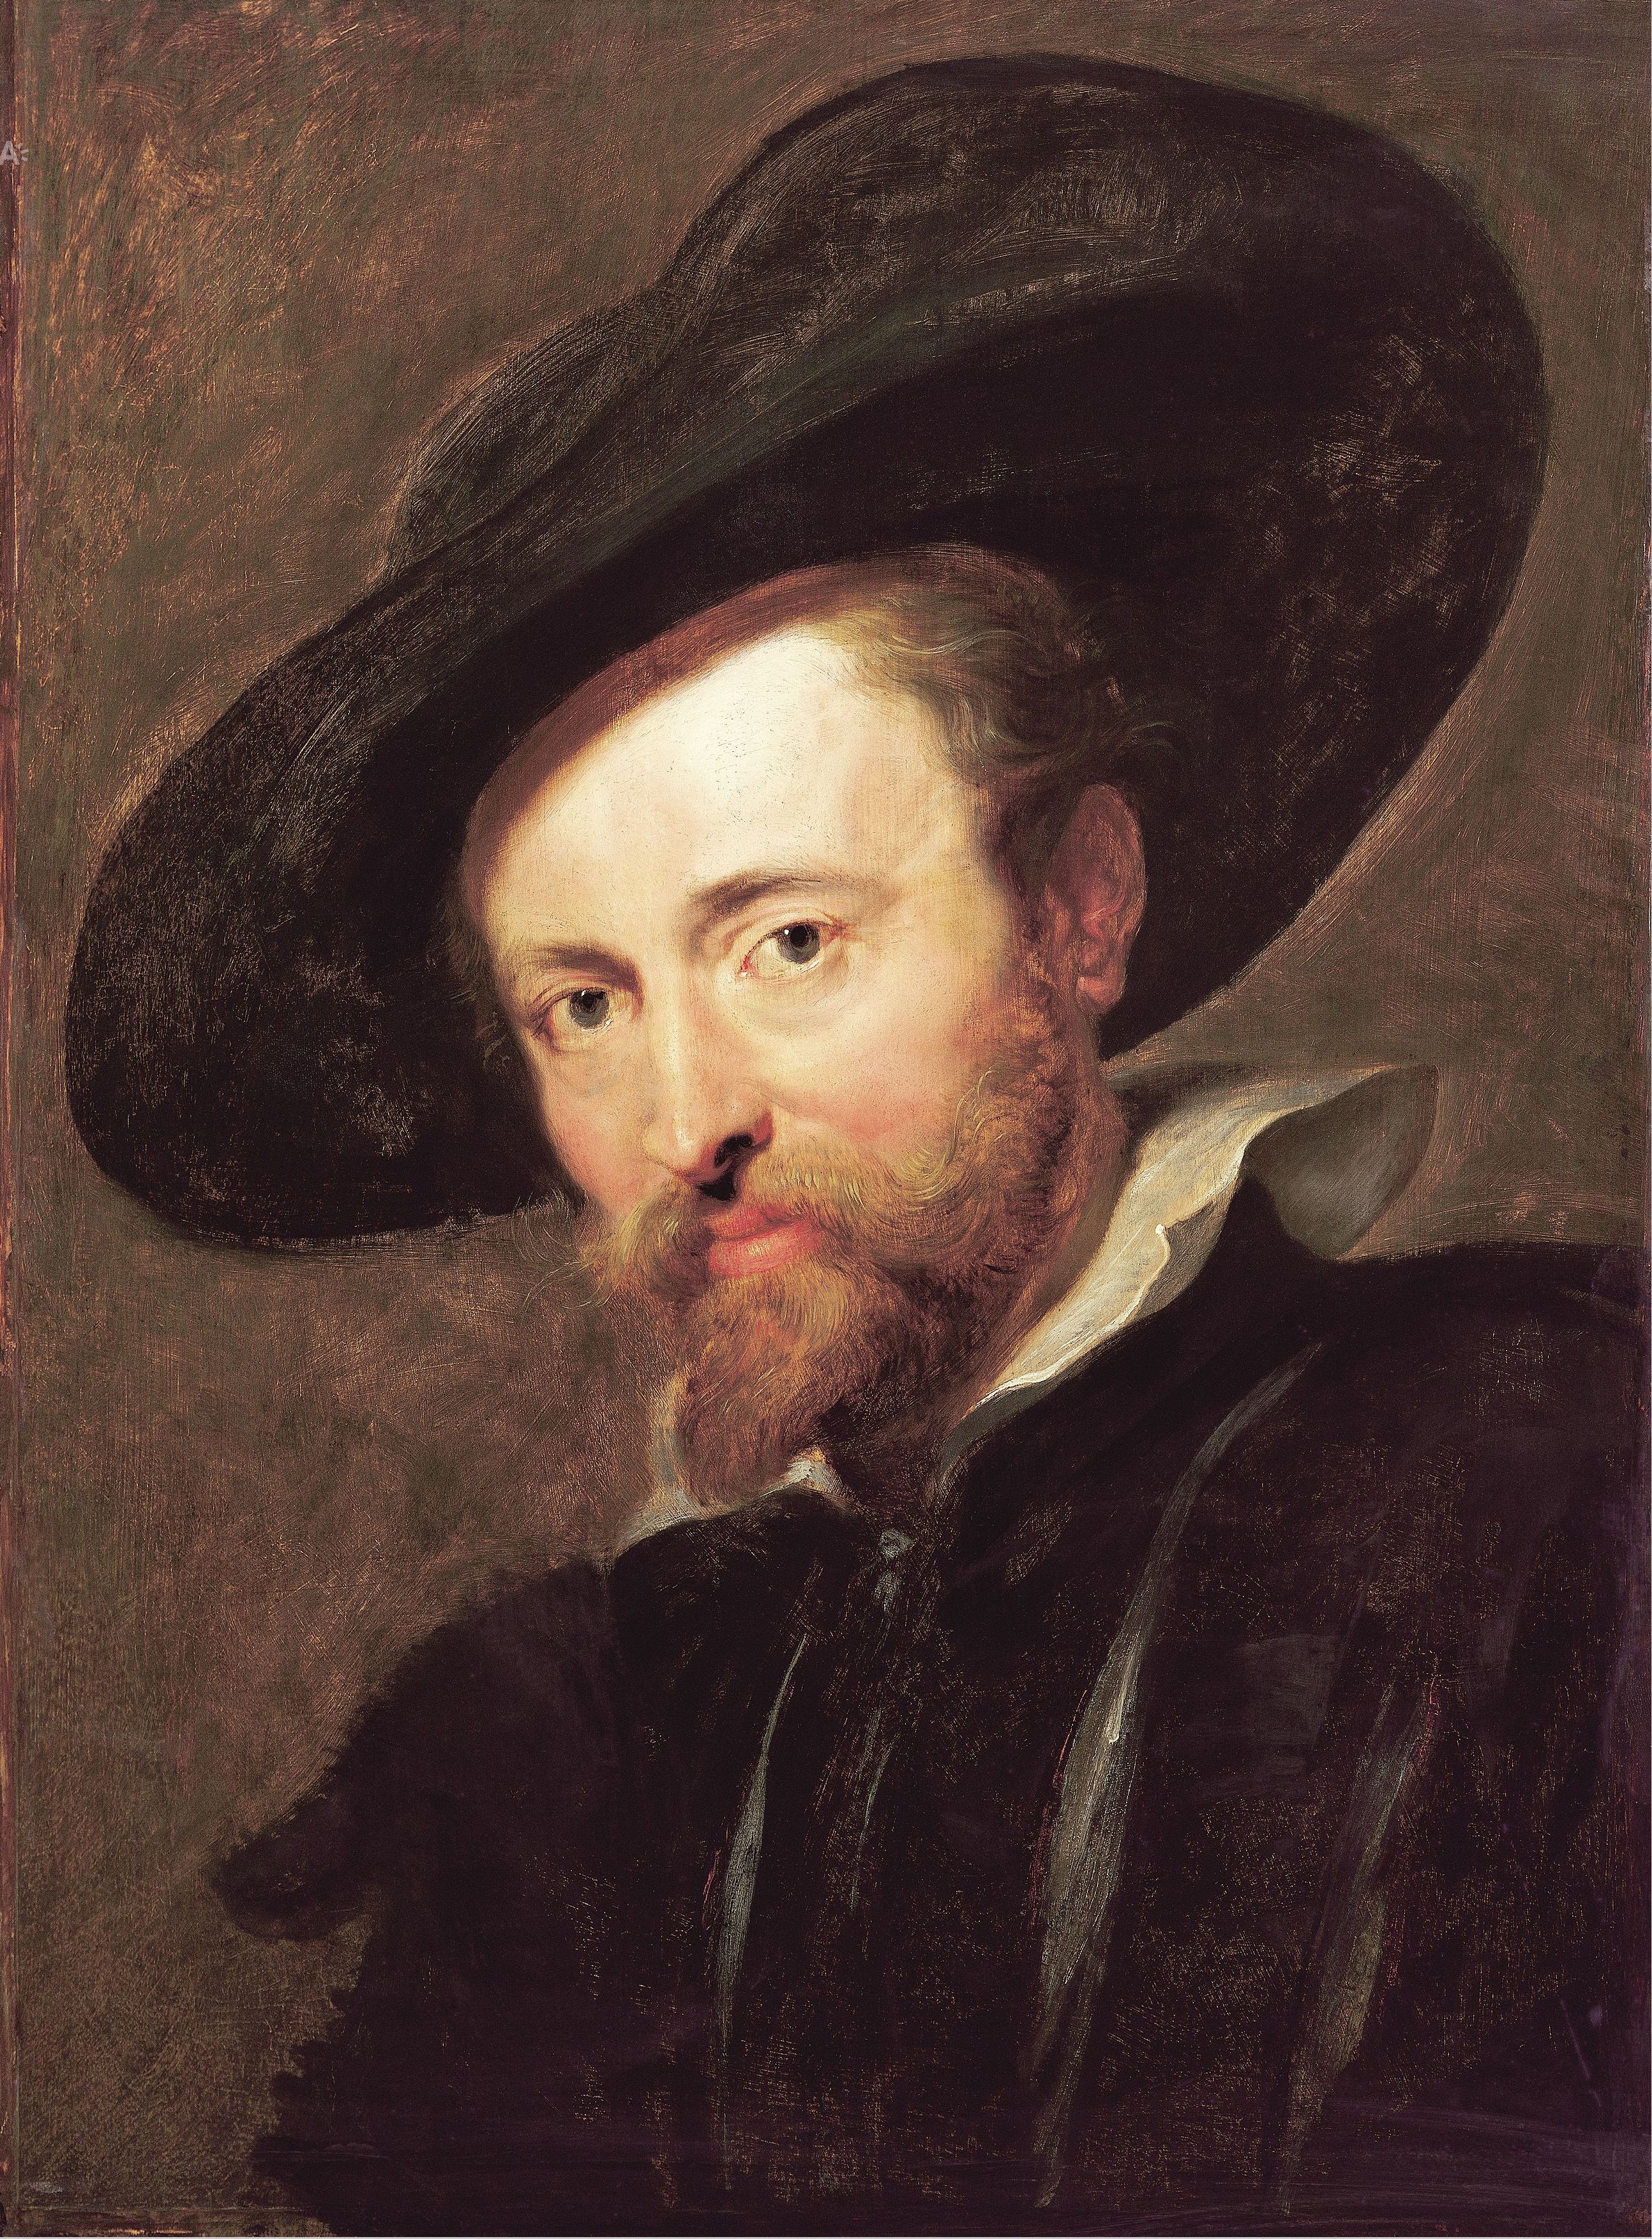 Peter Paul Rubens - June 28, 1577 - May 30, 1640